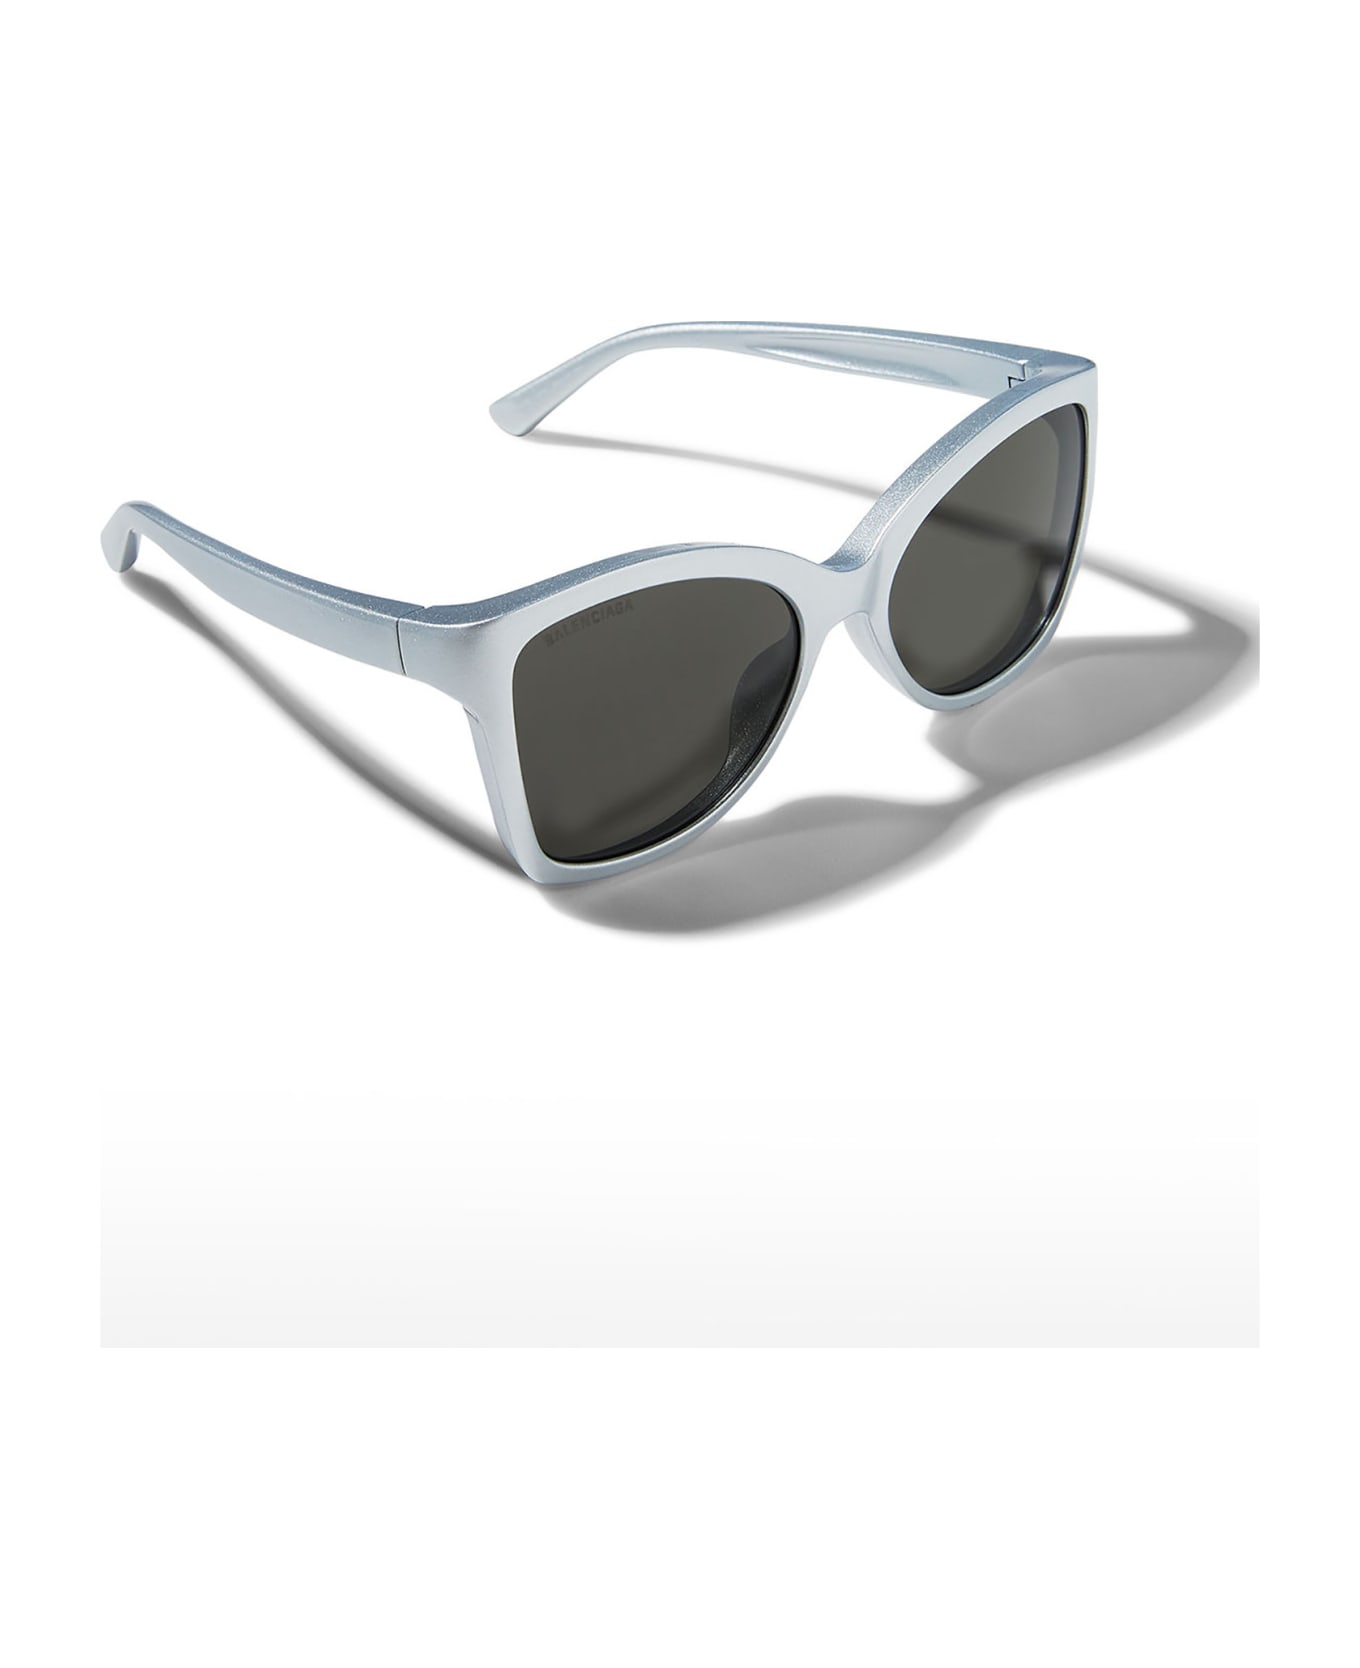 Balenciaga Eyewear 18no43l0a - ray ban bill square frame aviator sunglasses item